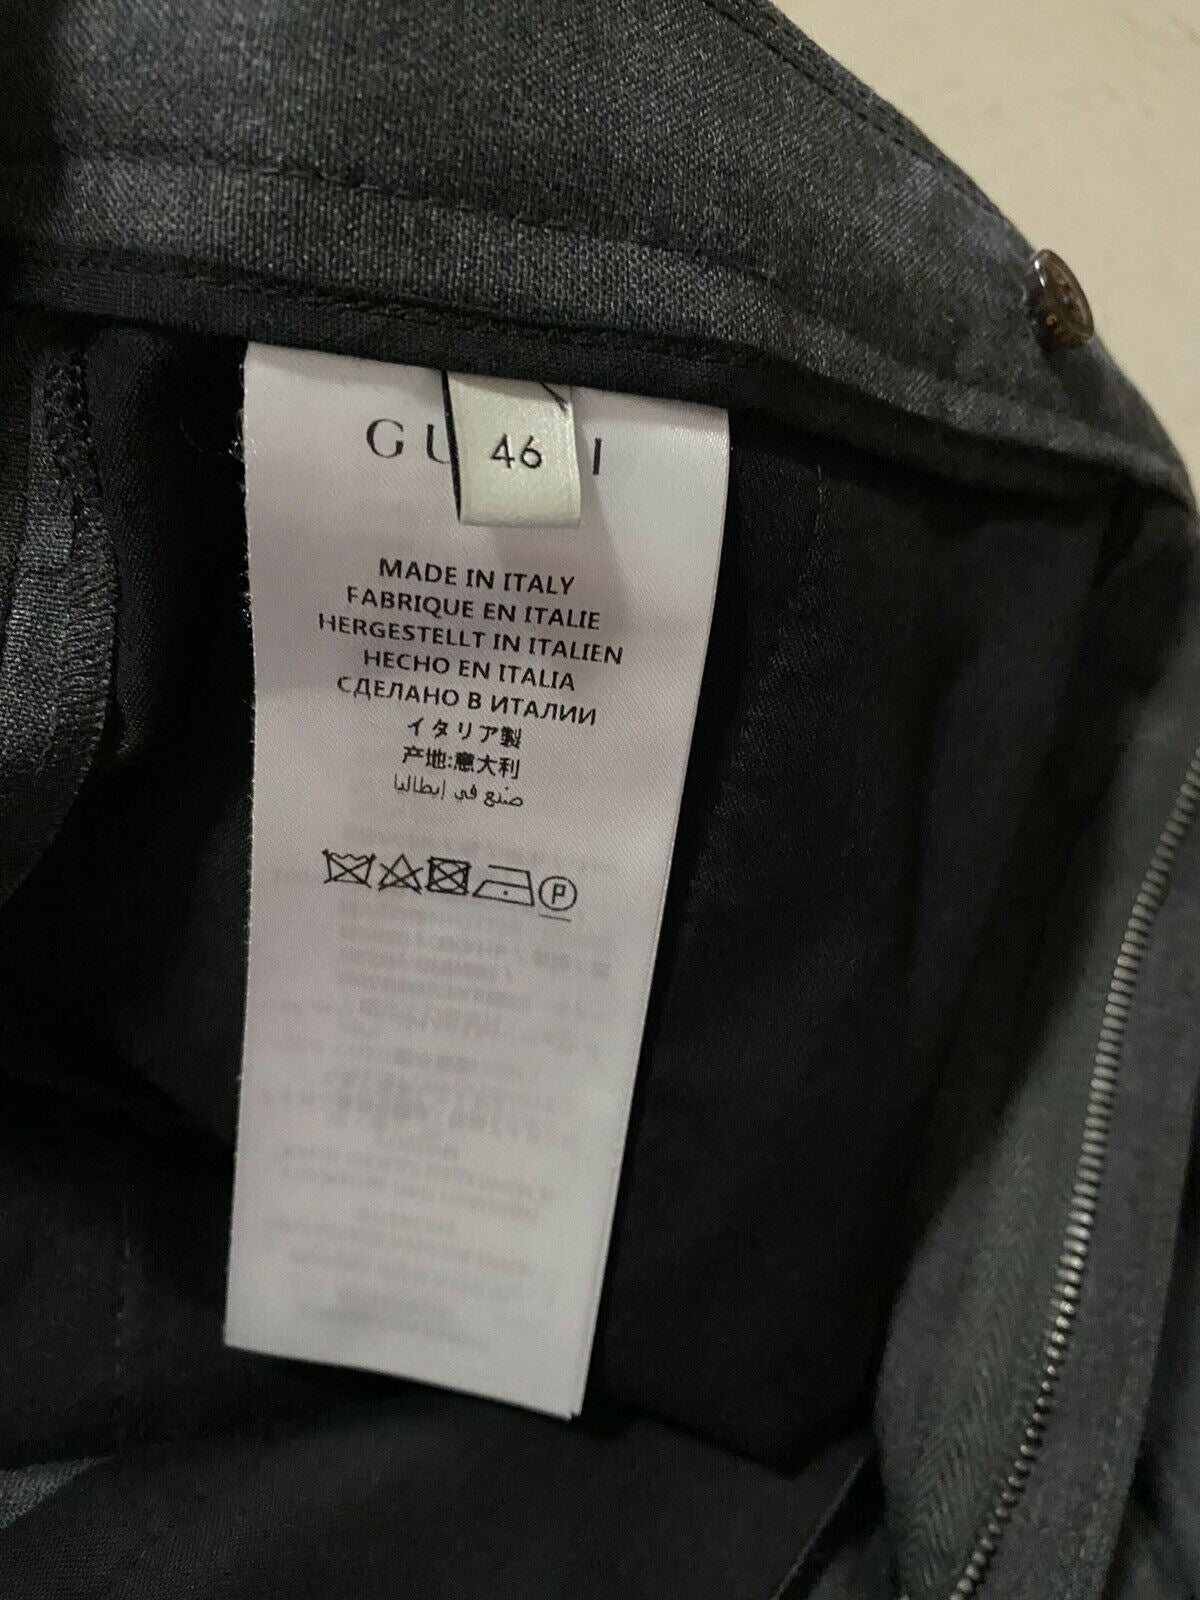 NWT $790 Gucci Mens Short Pants DK Gray Size 30 US ( 46 Eu ) Italy